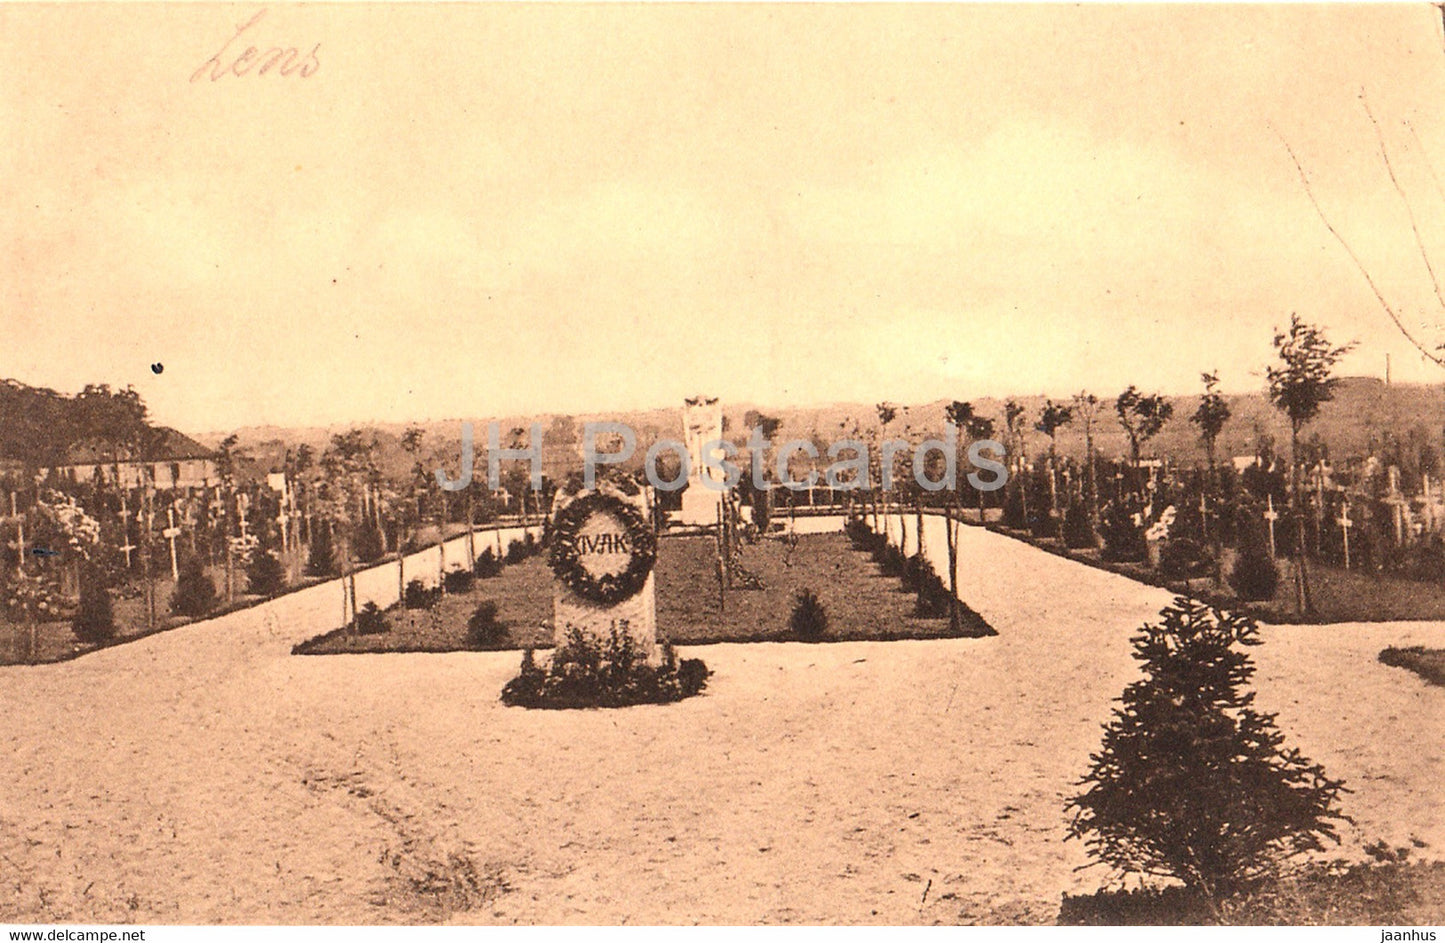 Off Postkarte z Gunsten d Hinterblieb - Korpsfriedhof Lens - Haupansicht - Feldpostkarte old postcard - France - unused - JH Postcards